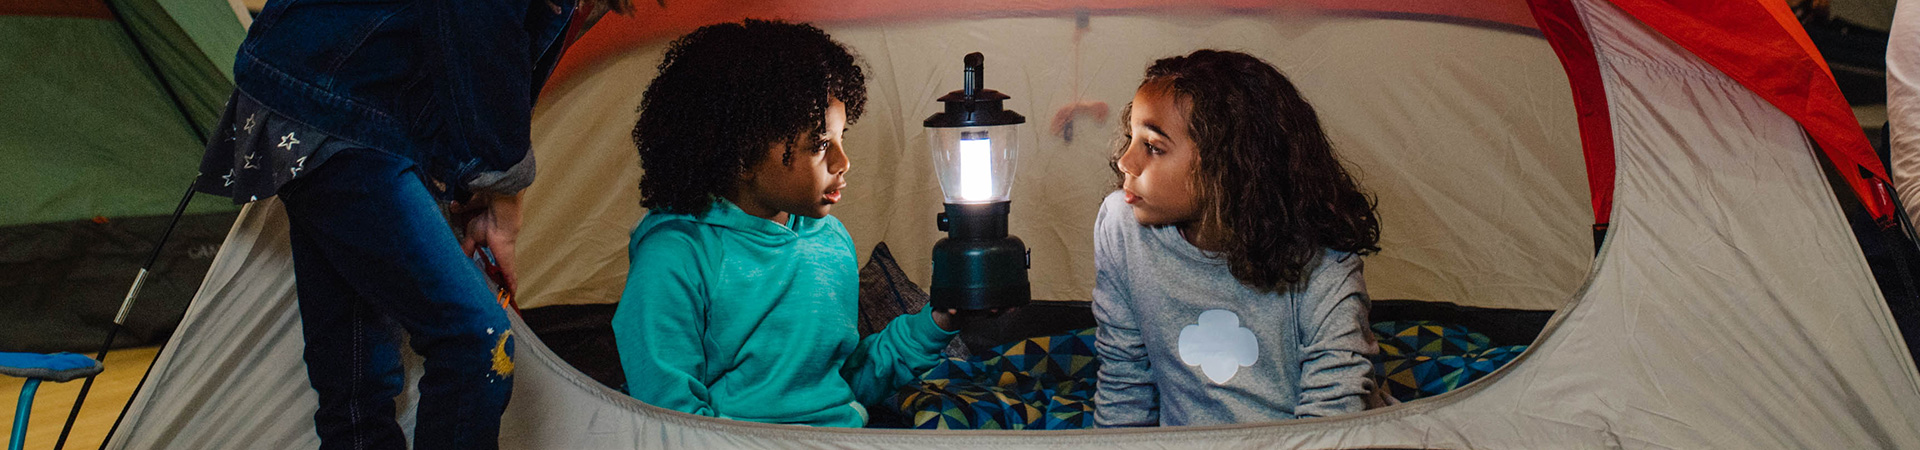  Two daisy kindergarten Girl Scouts holding lantern in tent camping wearing trefoil shirt. 